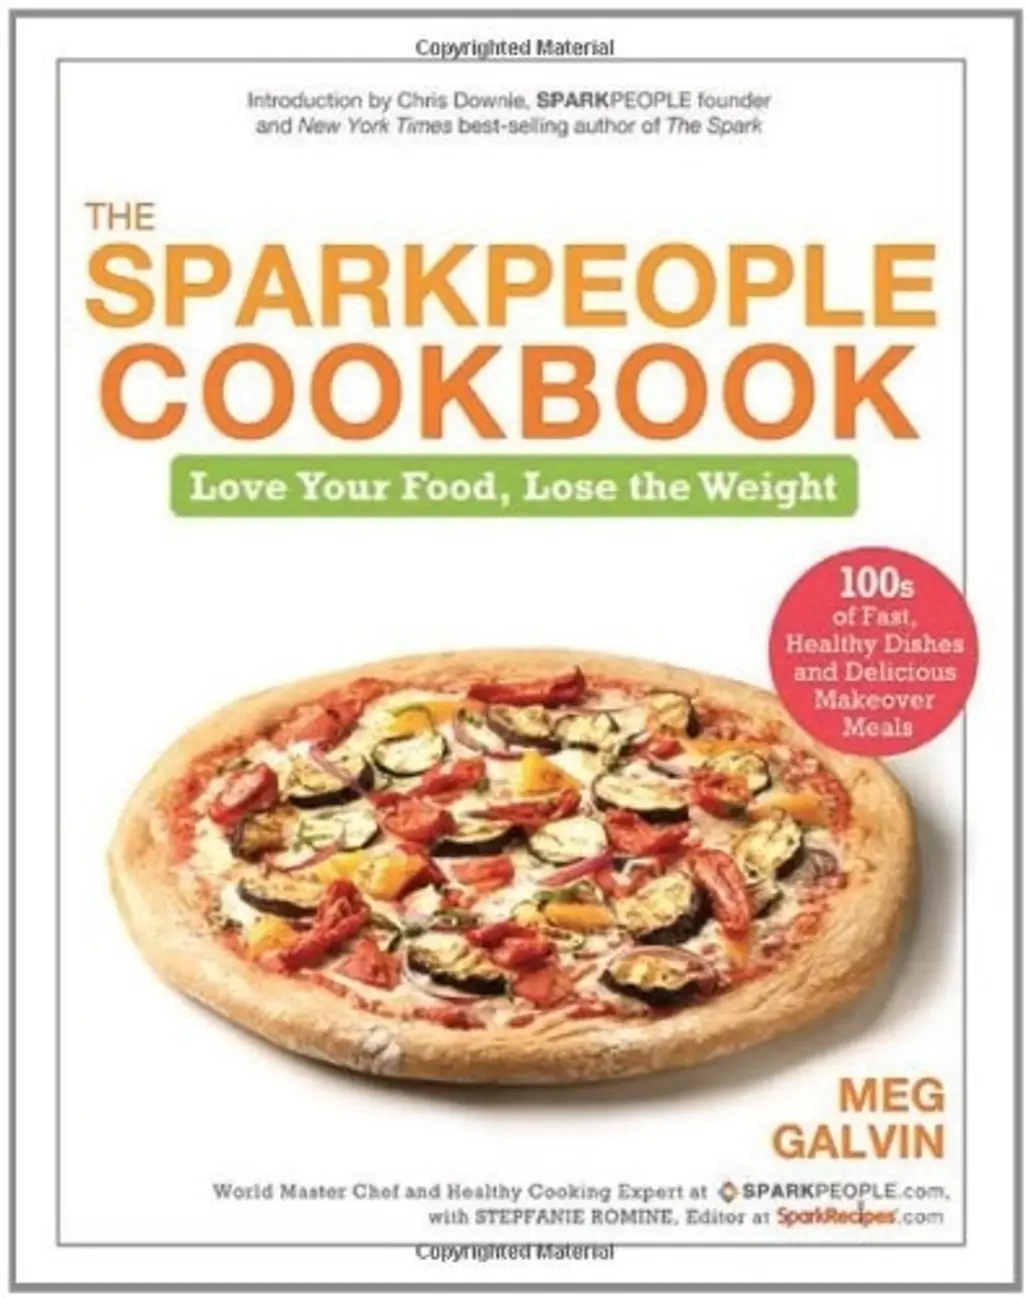 The Sparkpeople Cookbook